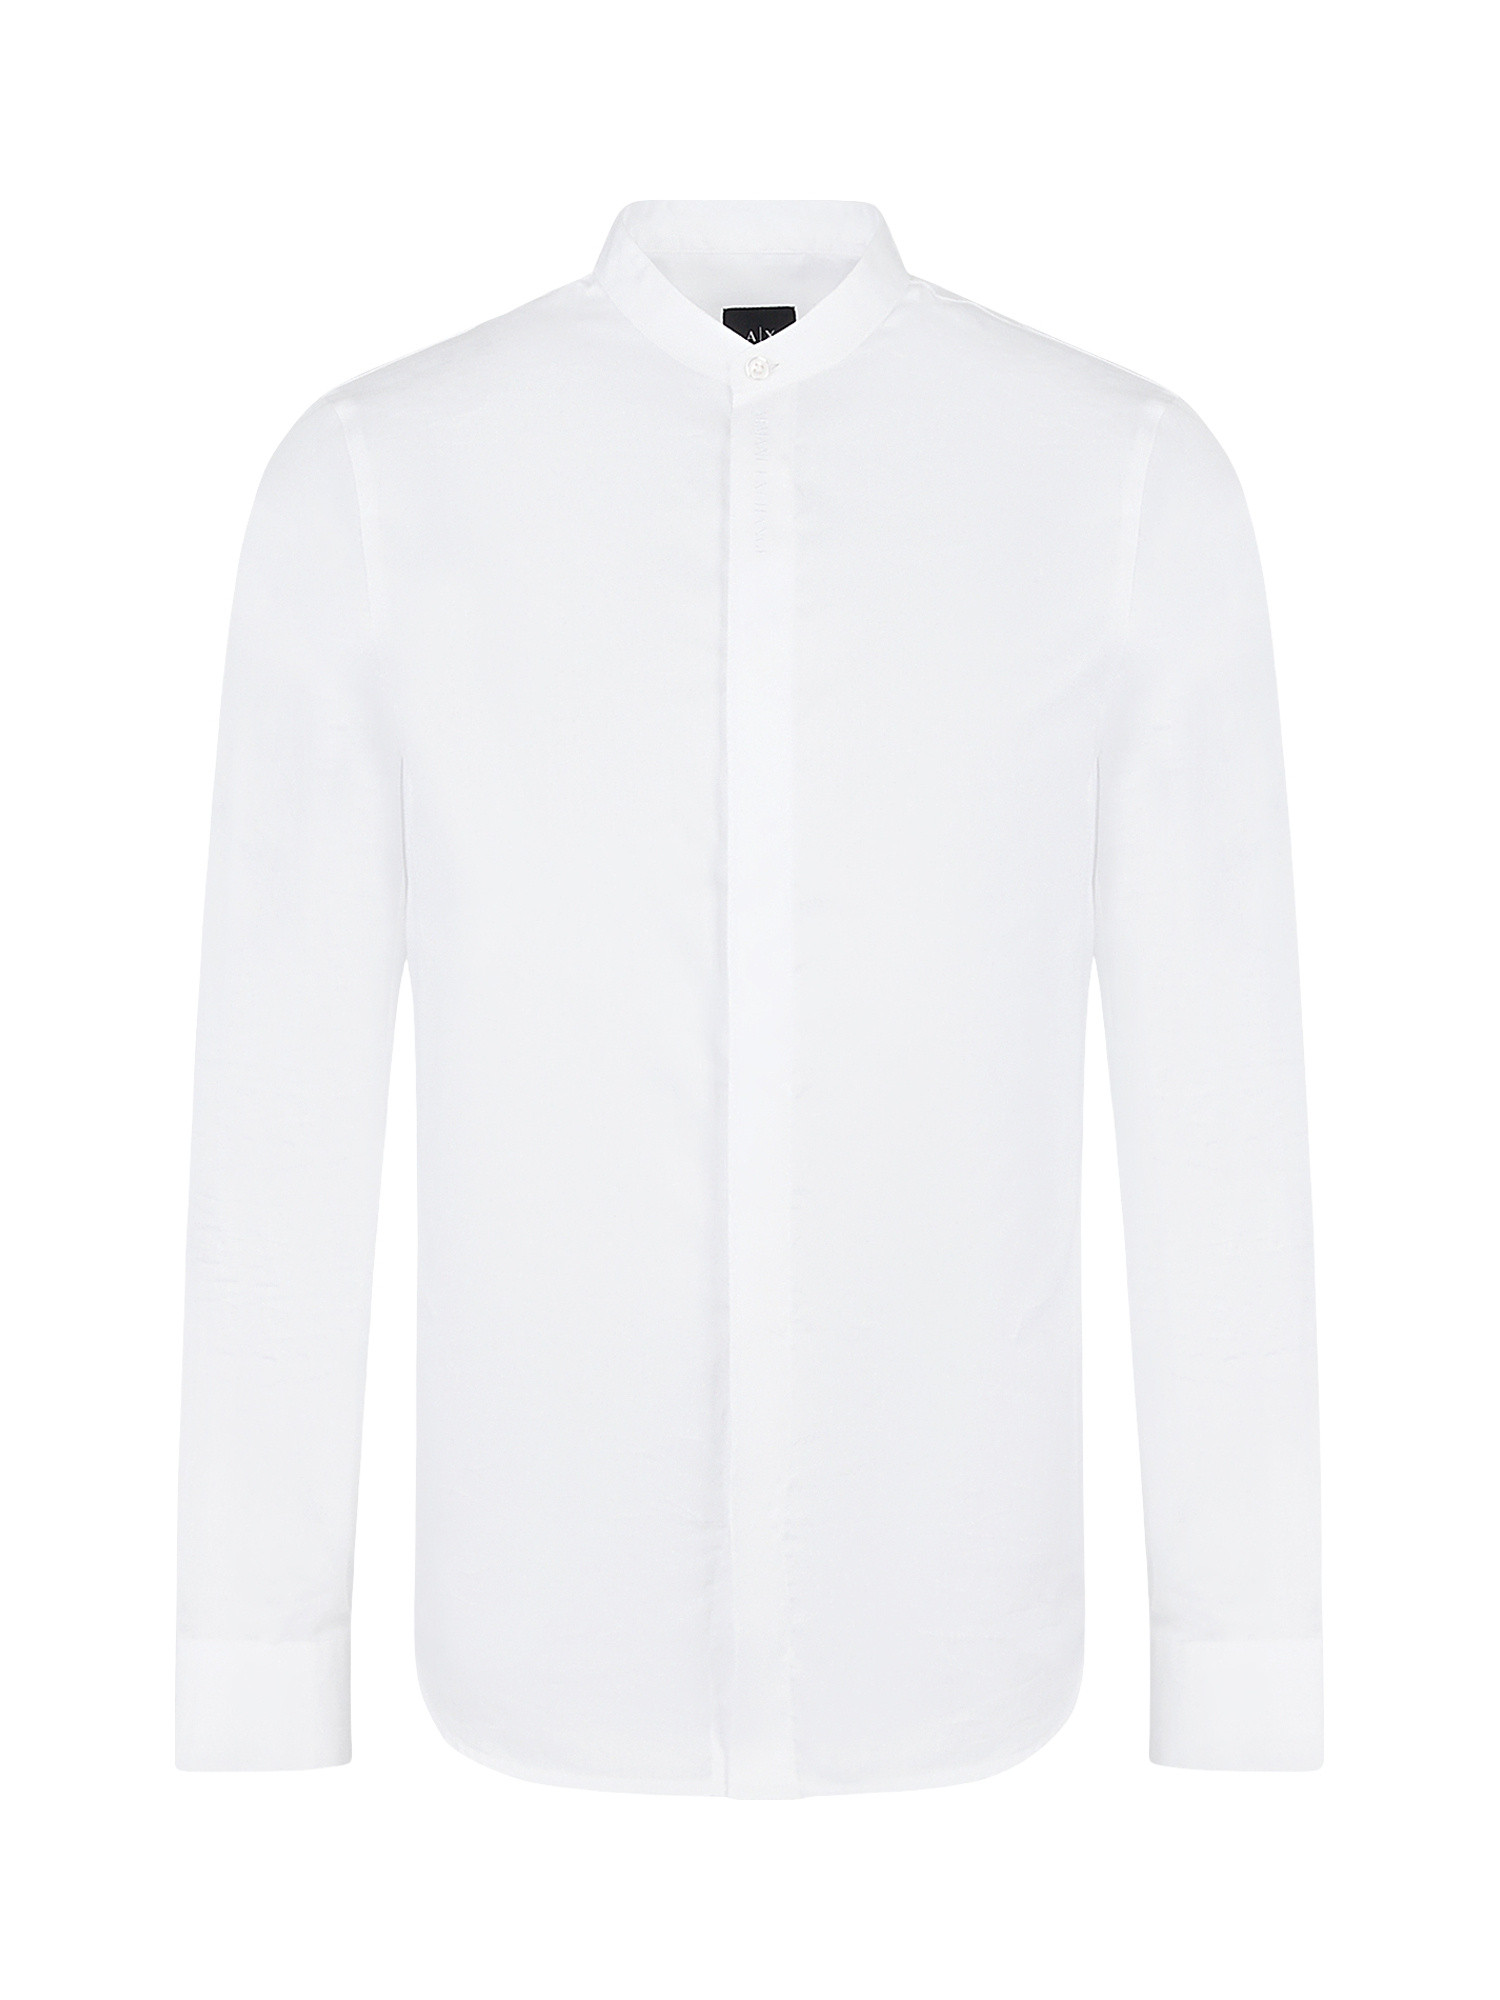 Armani Exchange - Slim fit shirt in cotton, White, large image number 0